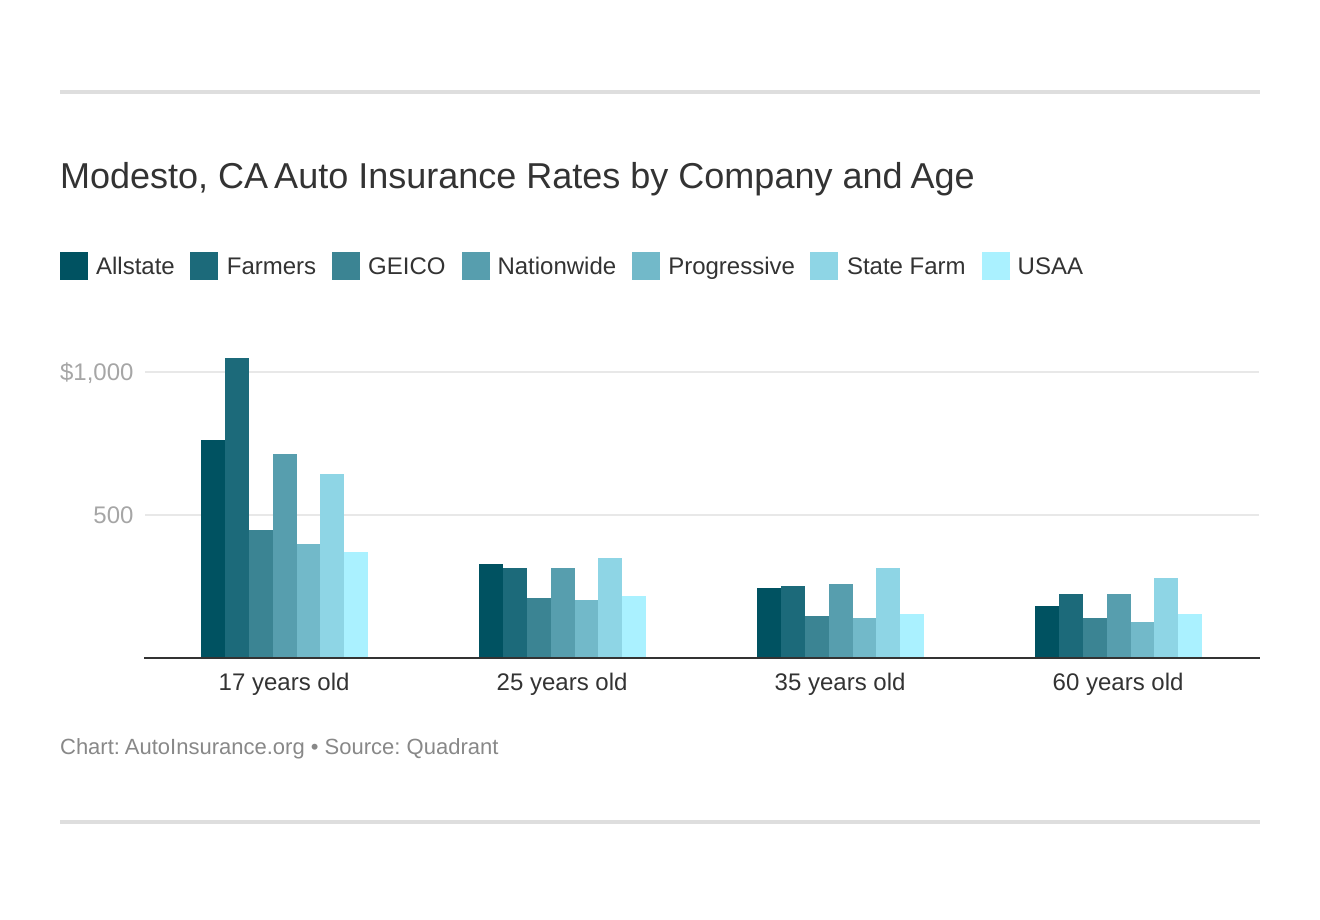 Modesto, CA Auto Insurance Rates by Company and Age